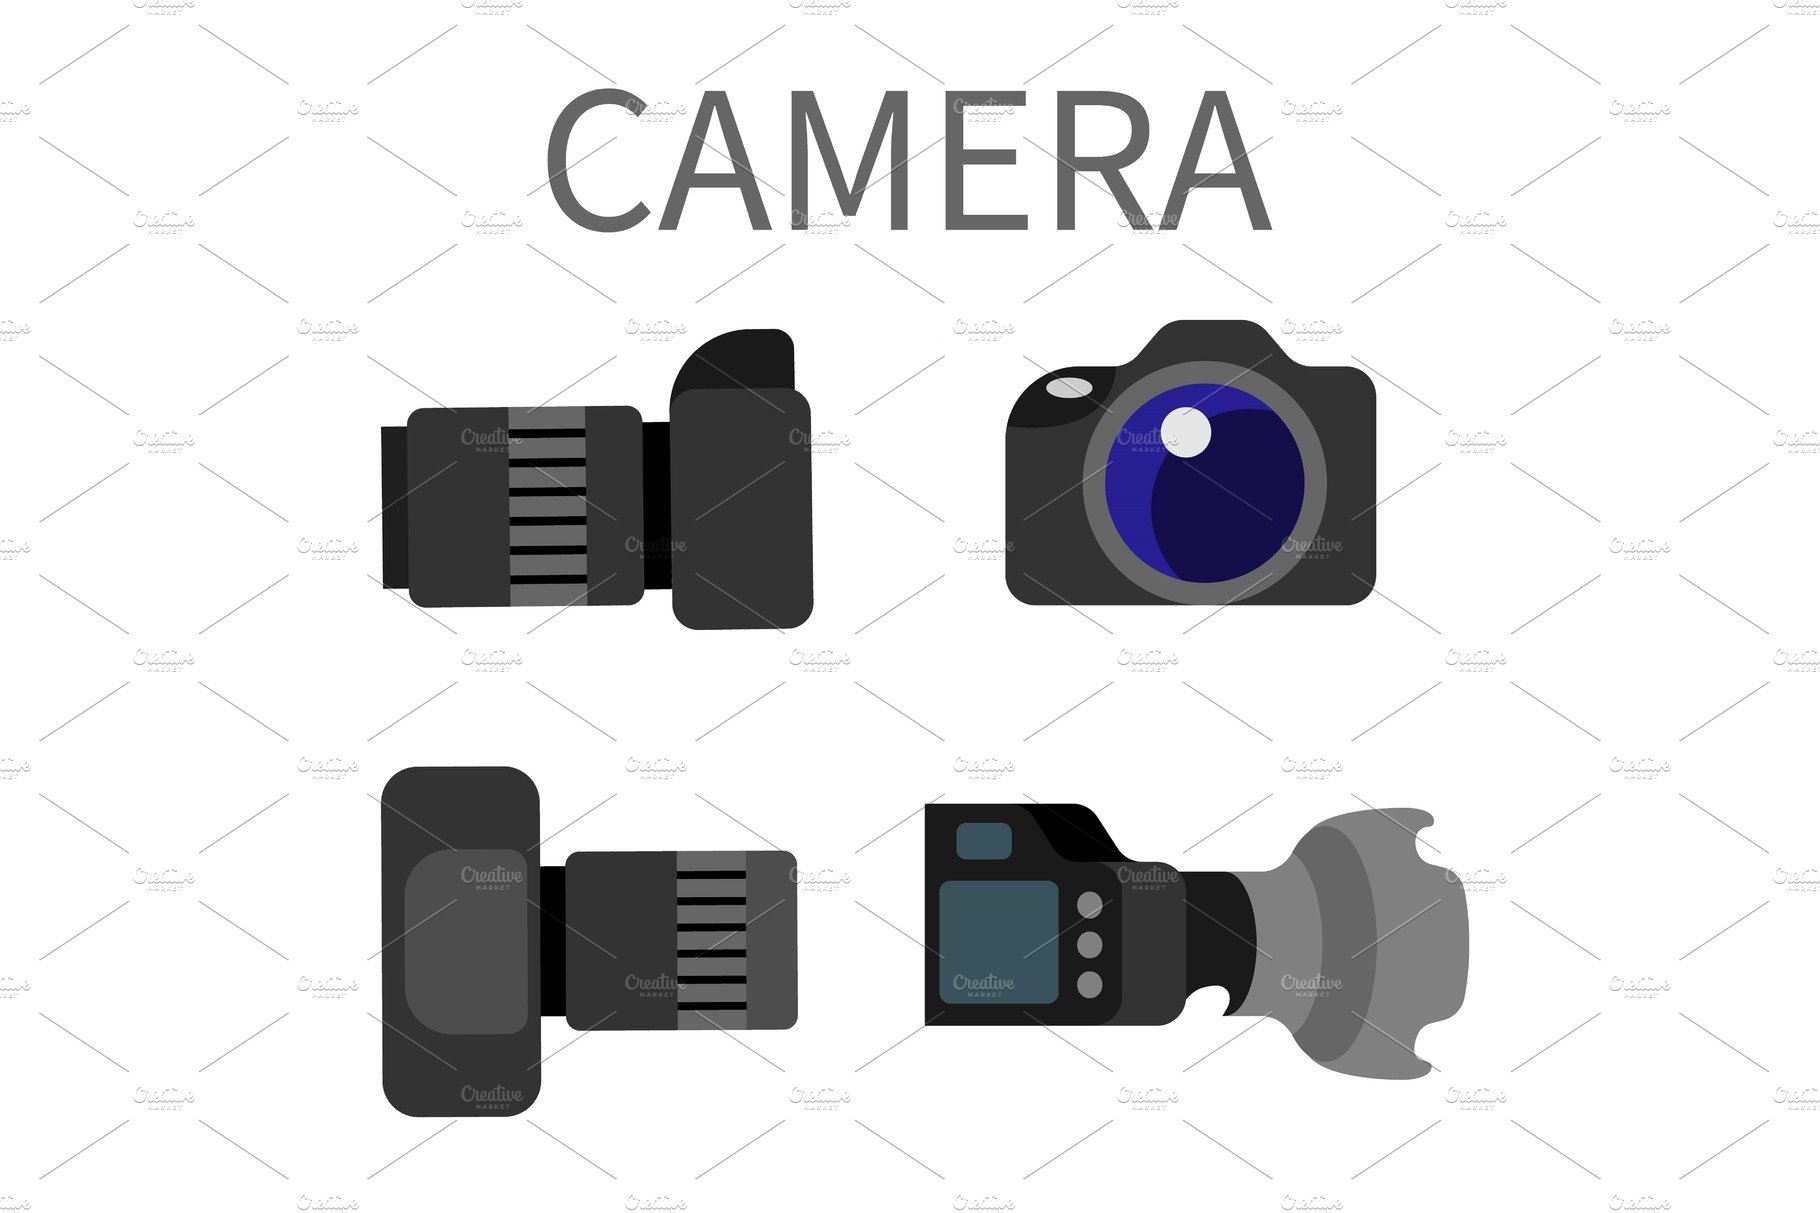 Digital photocameras with lens cover image.